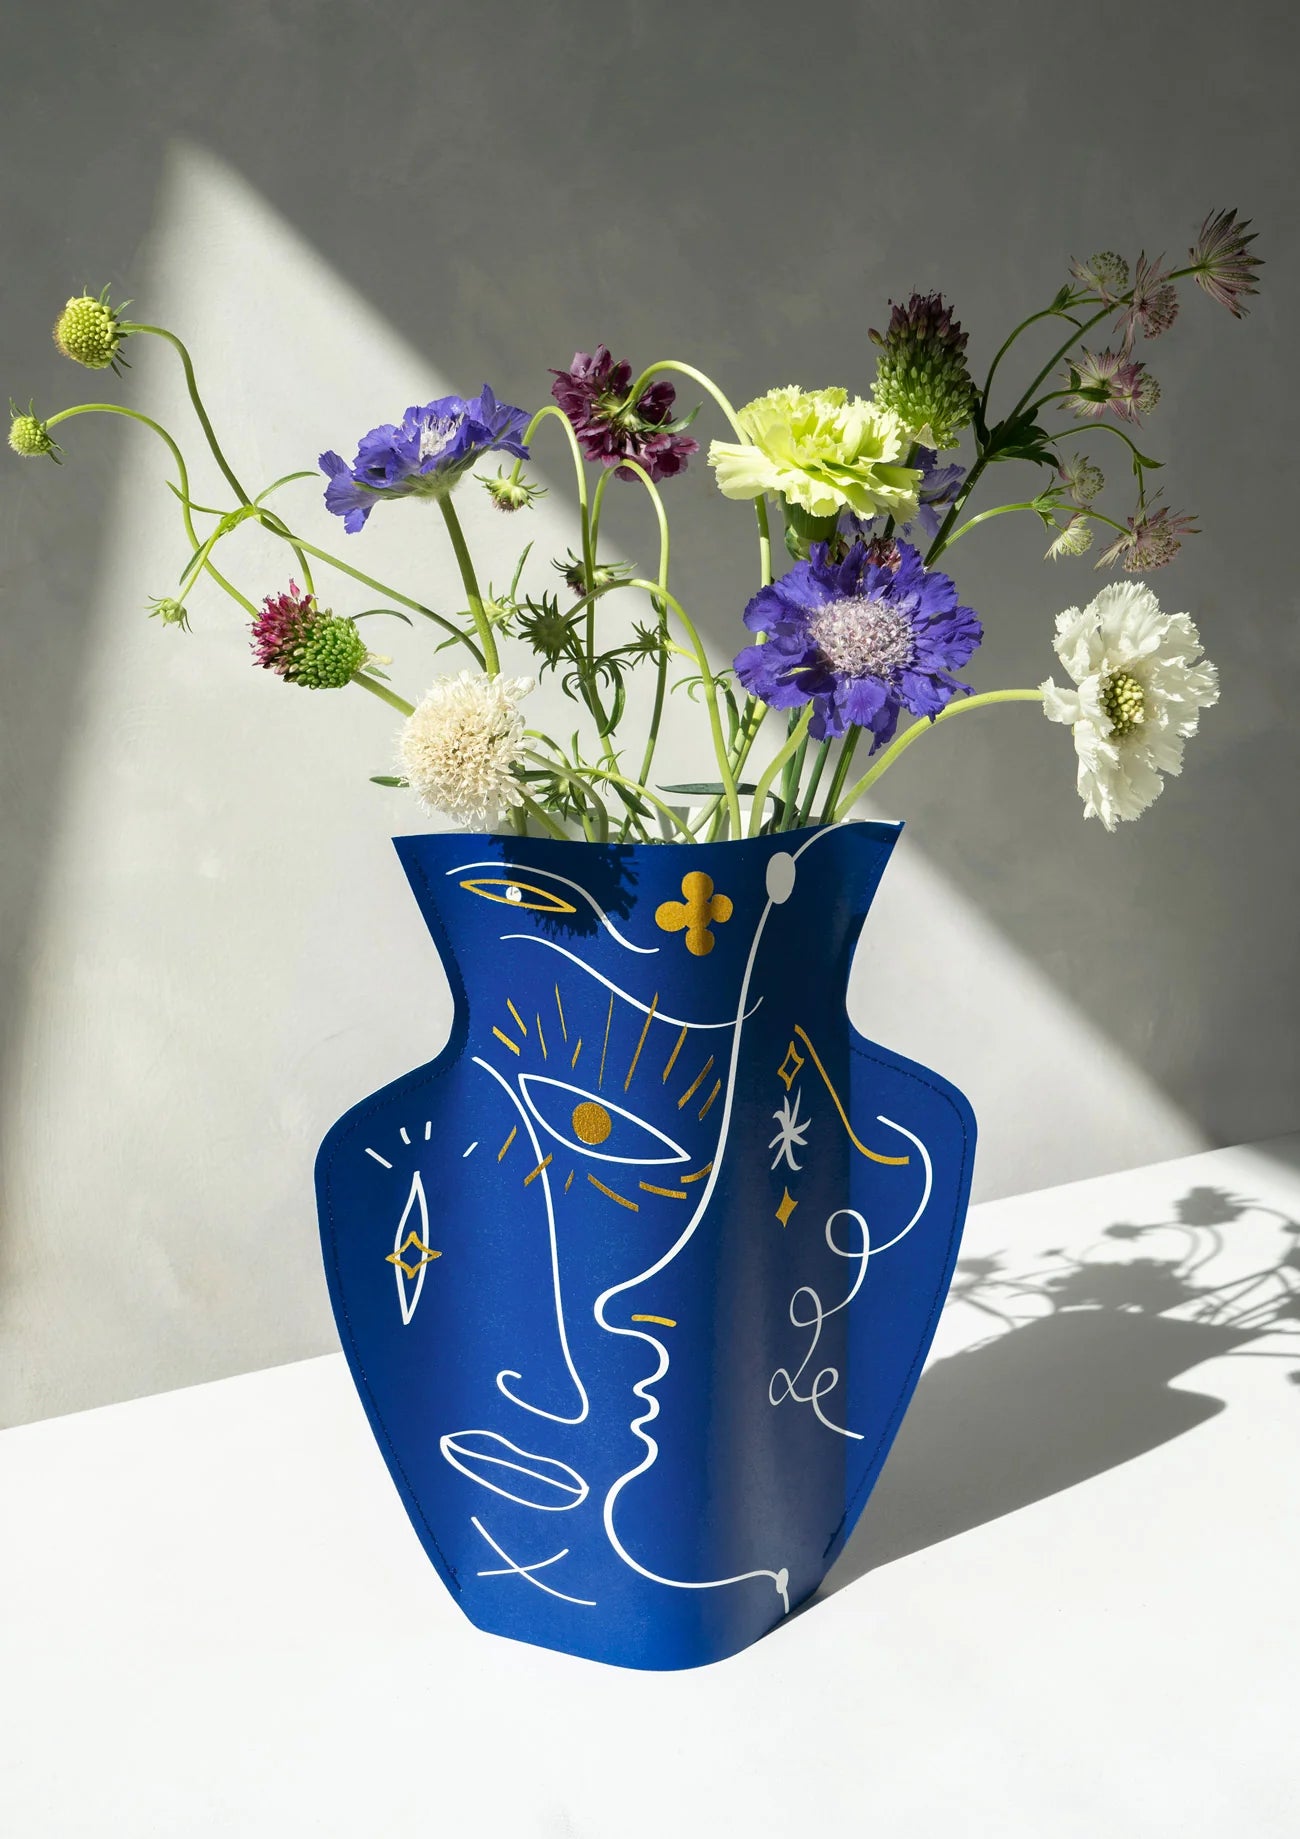 OCTAEVO - Paper Vase Jaime Hayon